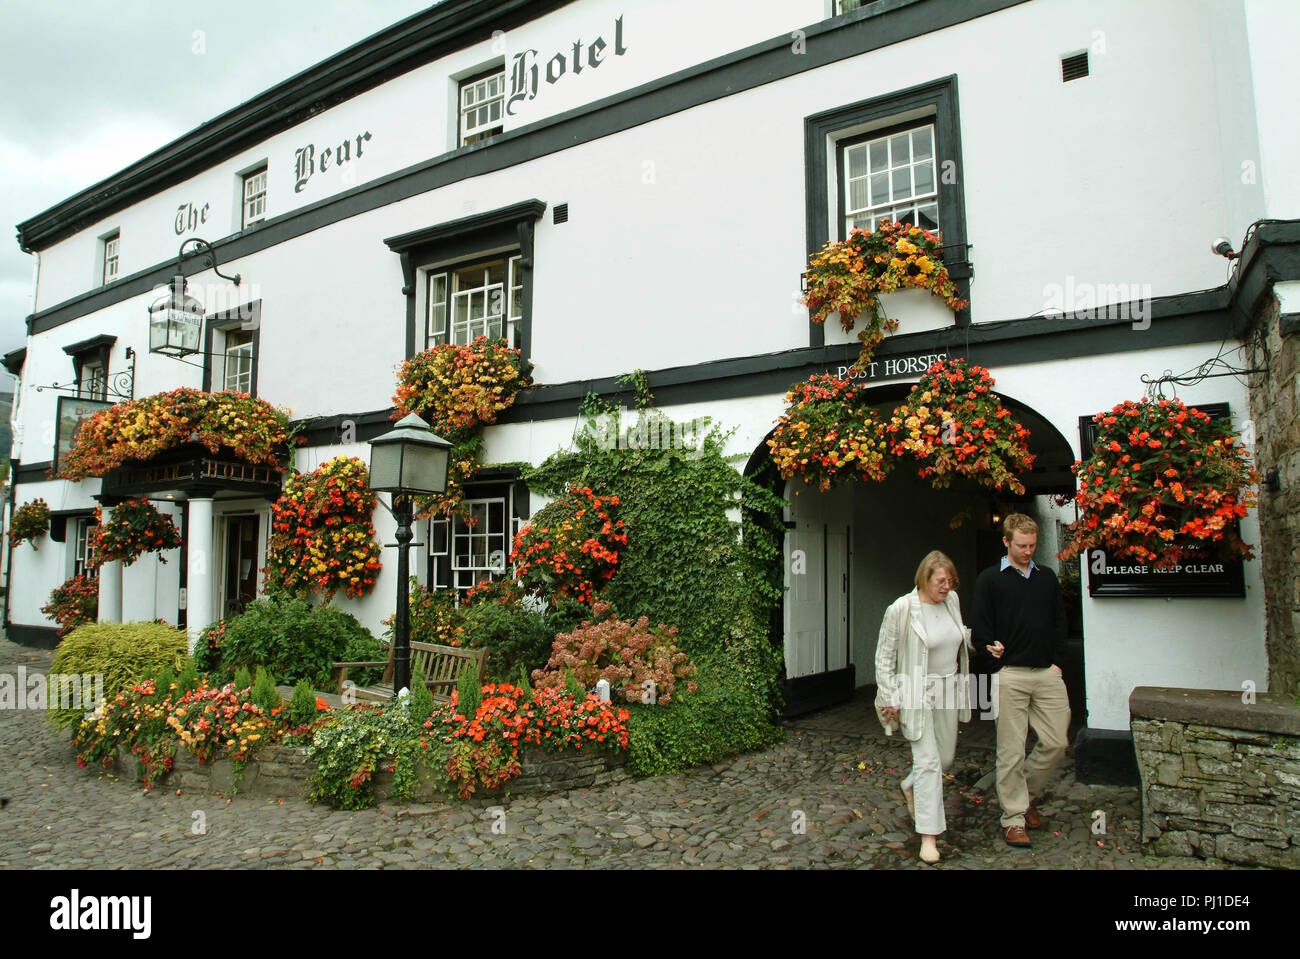 The Bear Hotel  at Crickhowell, Wales, UK Stock Photo